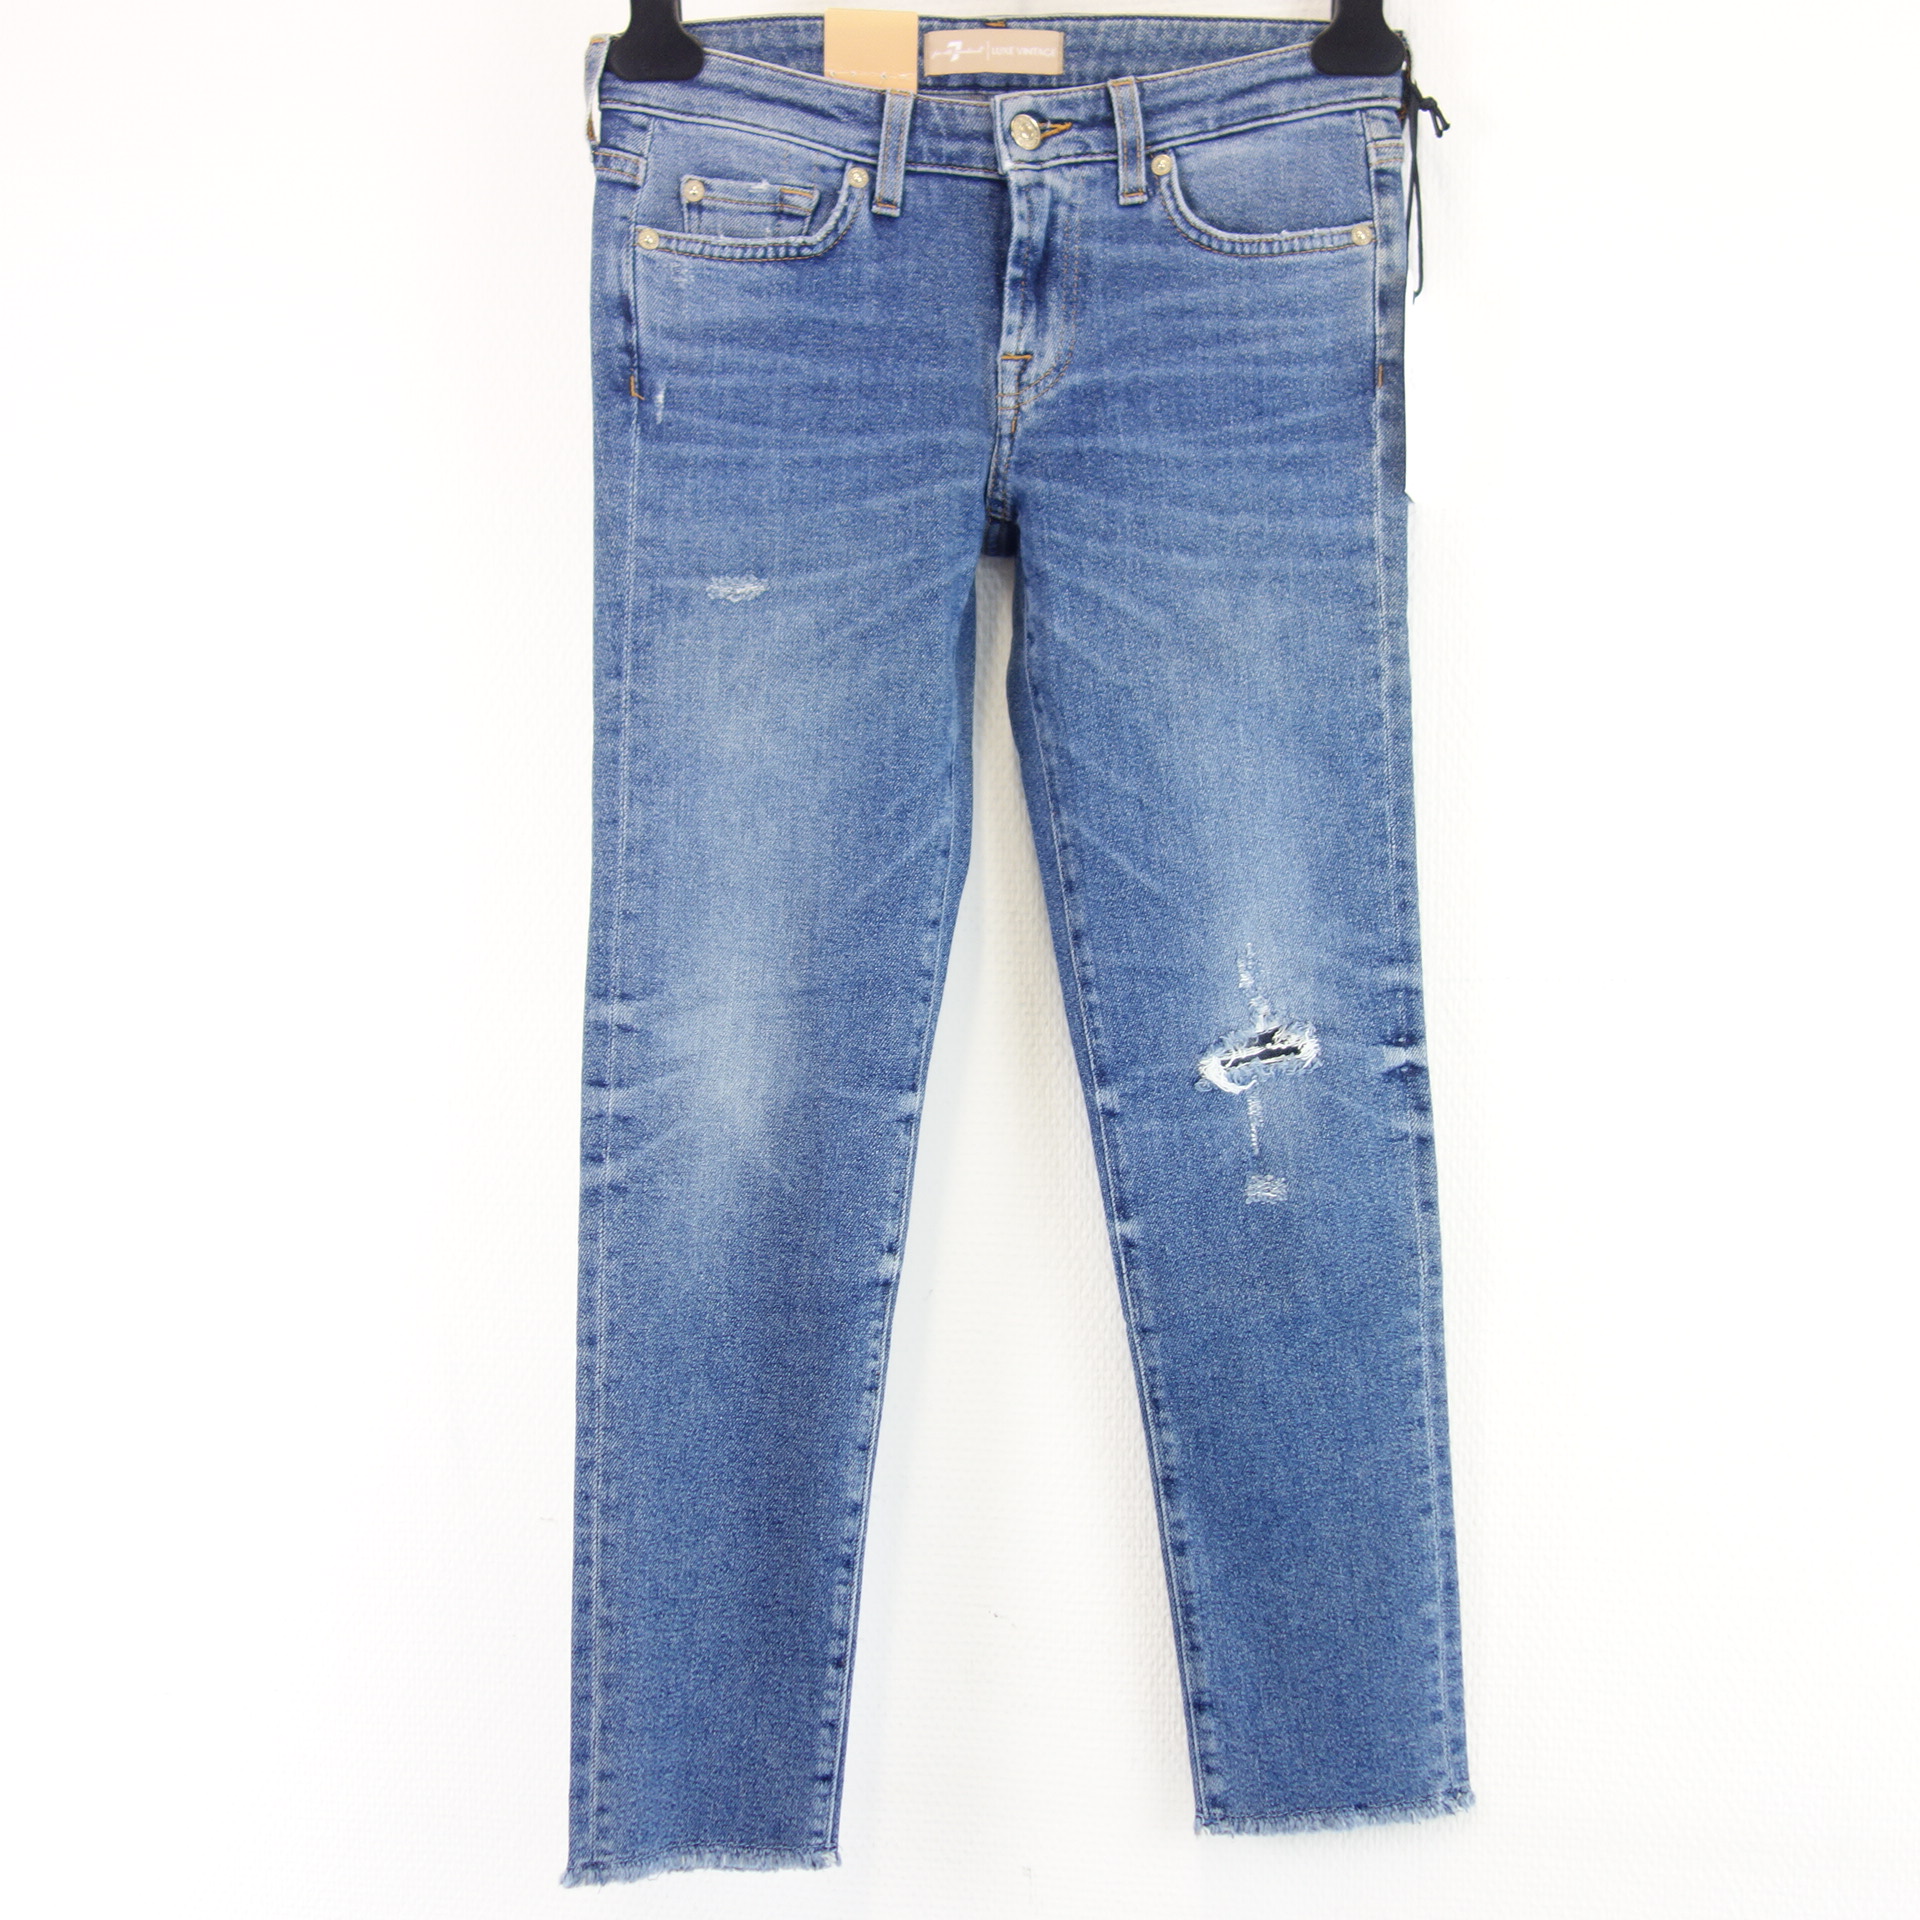 7 FOR ALL MANKIND Damen Jeans Hose Jeanshose Blau 25 PYPER Crop Luxe Vintage